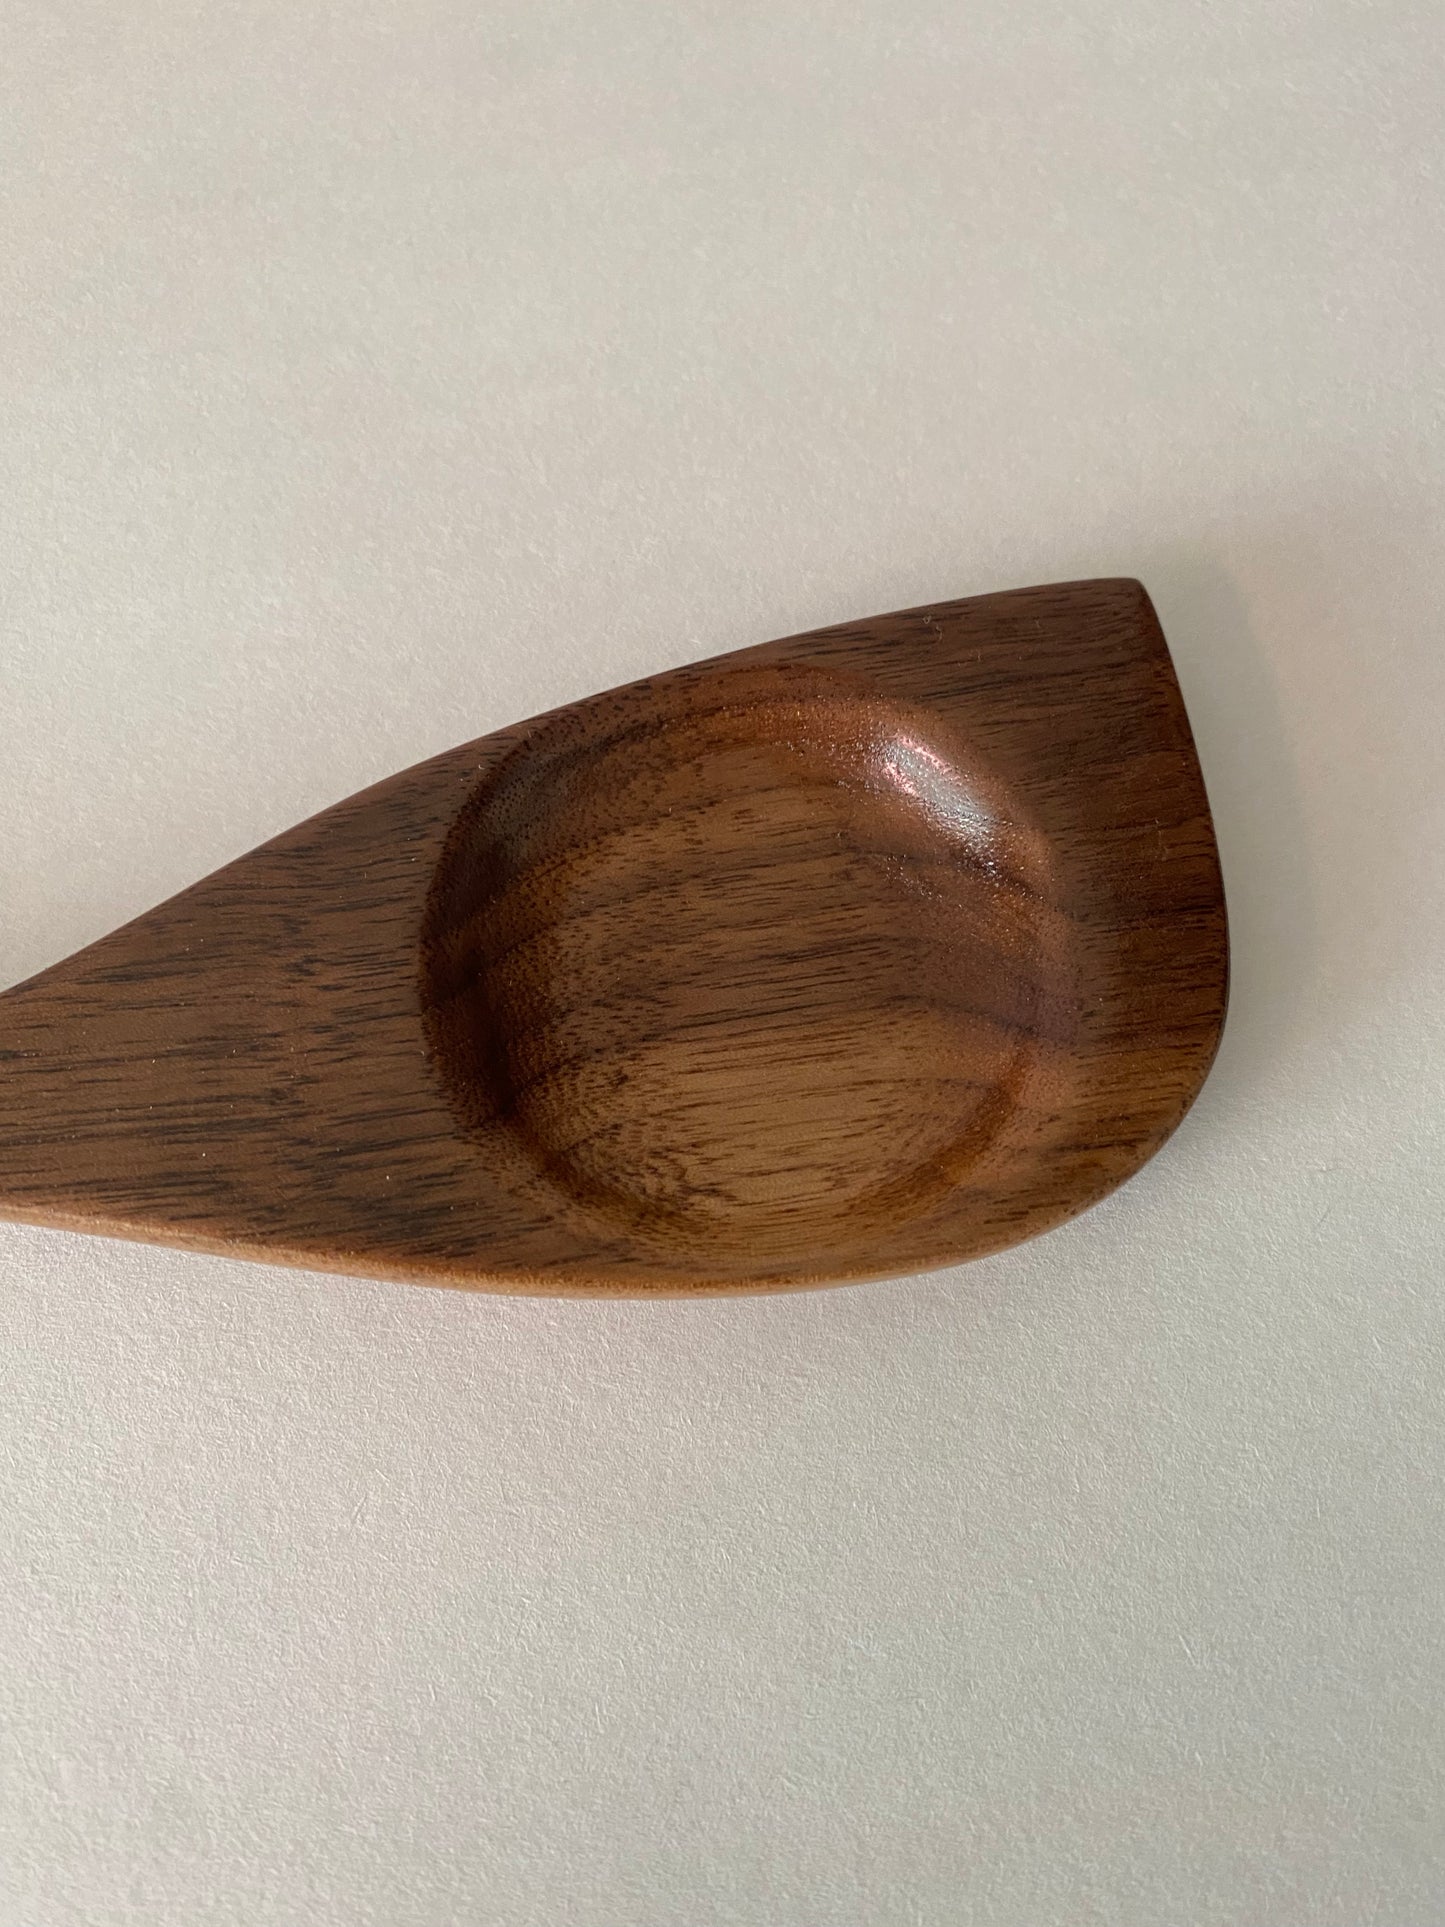 Black Walnut Corner Spoon - Hand-carved in Canada